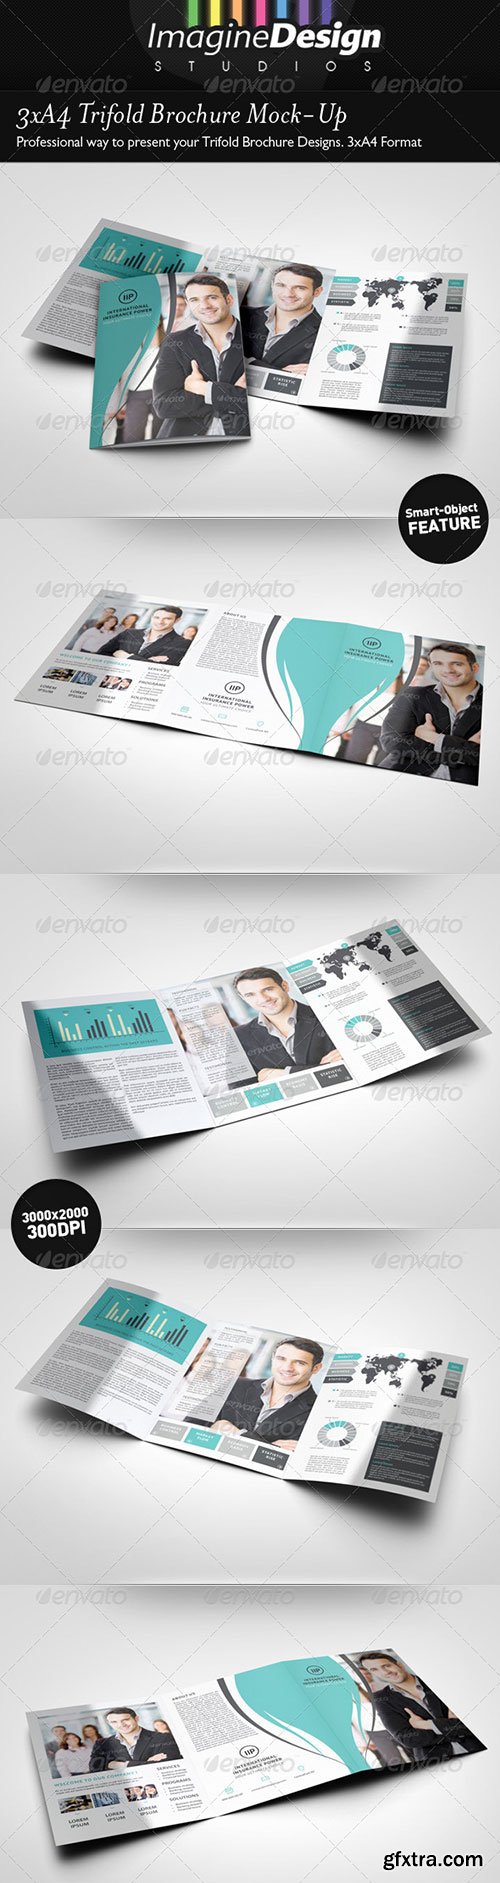 GraphicRiver - 3xA4 Trifold Brochure Mock-Up